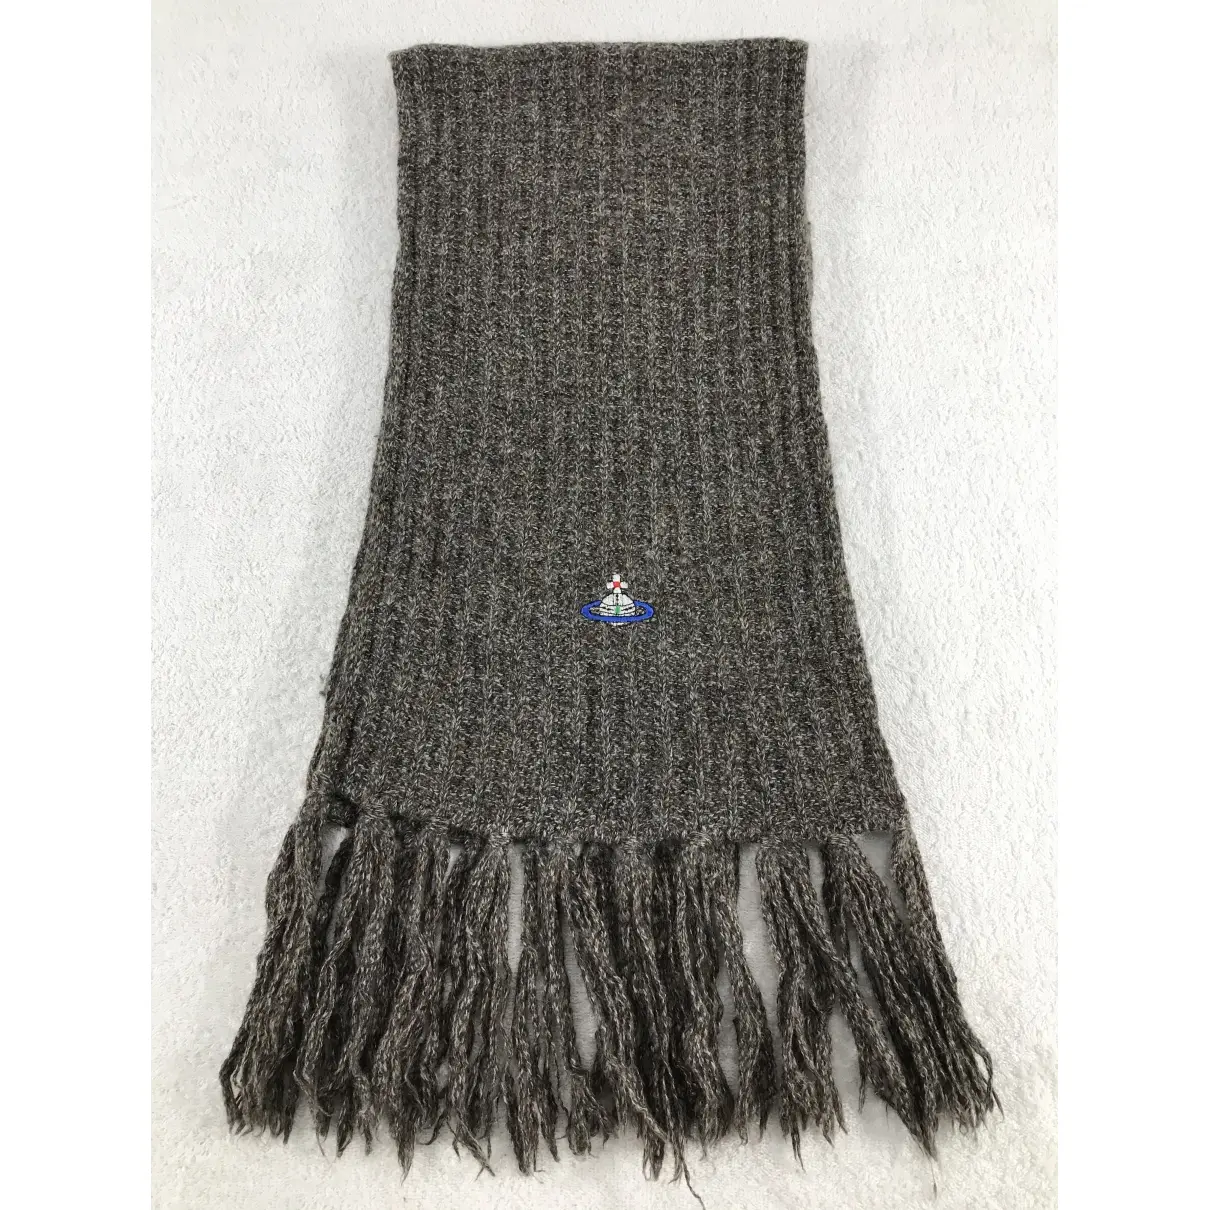 Vivienne Westwood Wool scarf & pocket square for sale